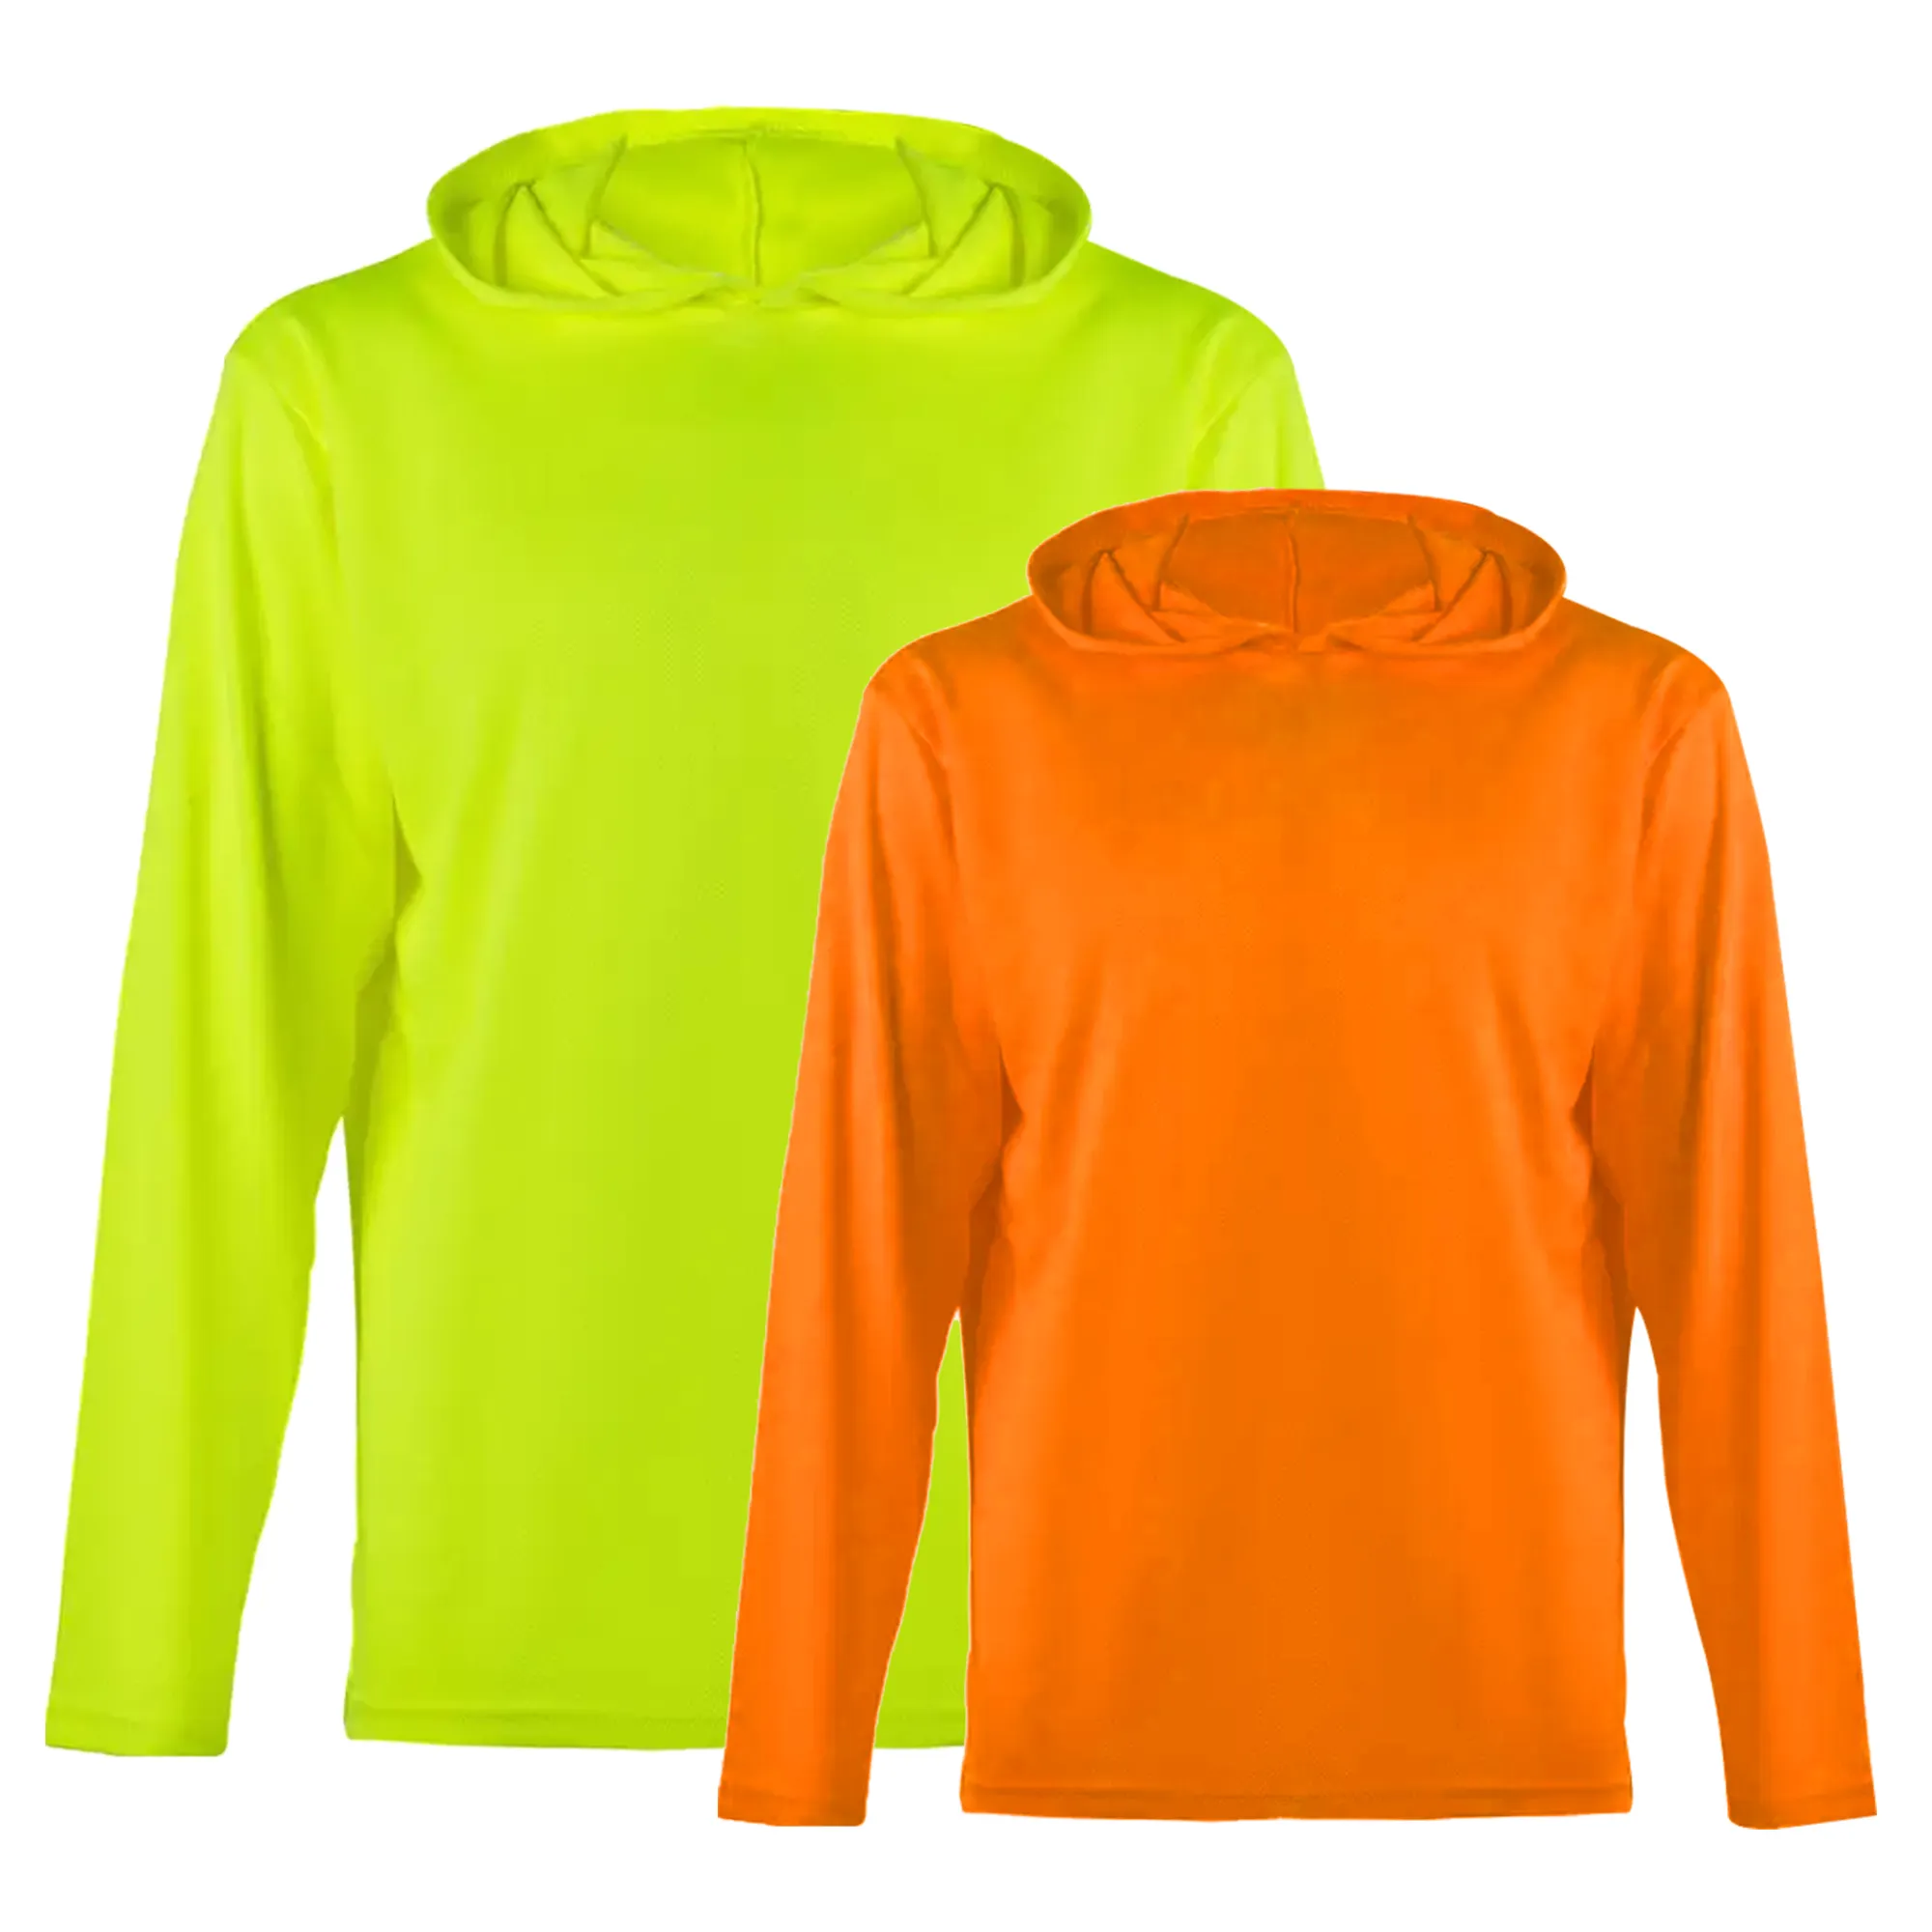 ZUJA Retail Basic Style Long Sleeve fluorescent yellow orange Men Hoodies RTS Hivi Breathable Bird Eye Hoodie Safety Sweatshirts